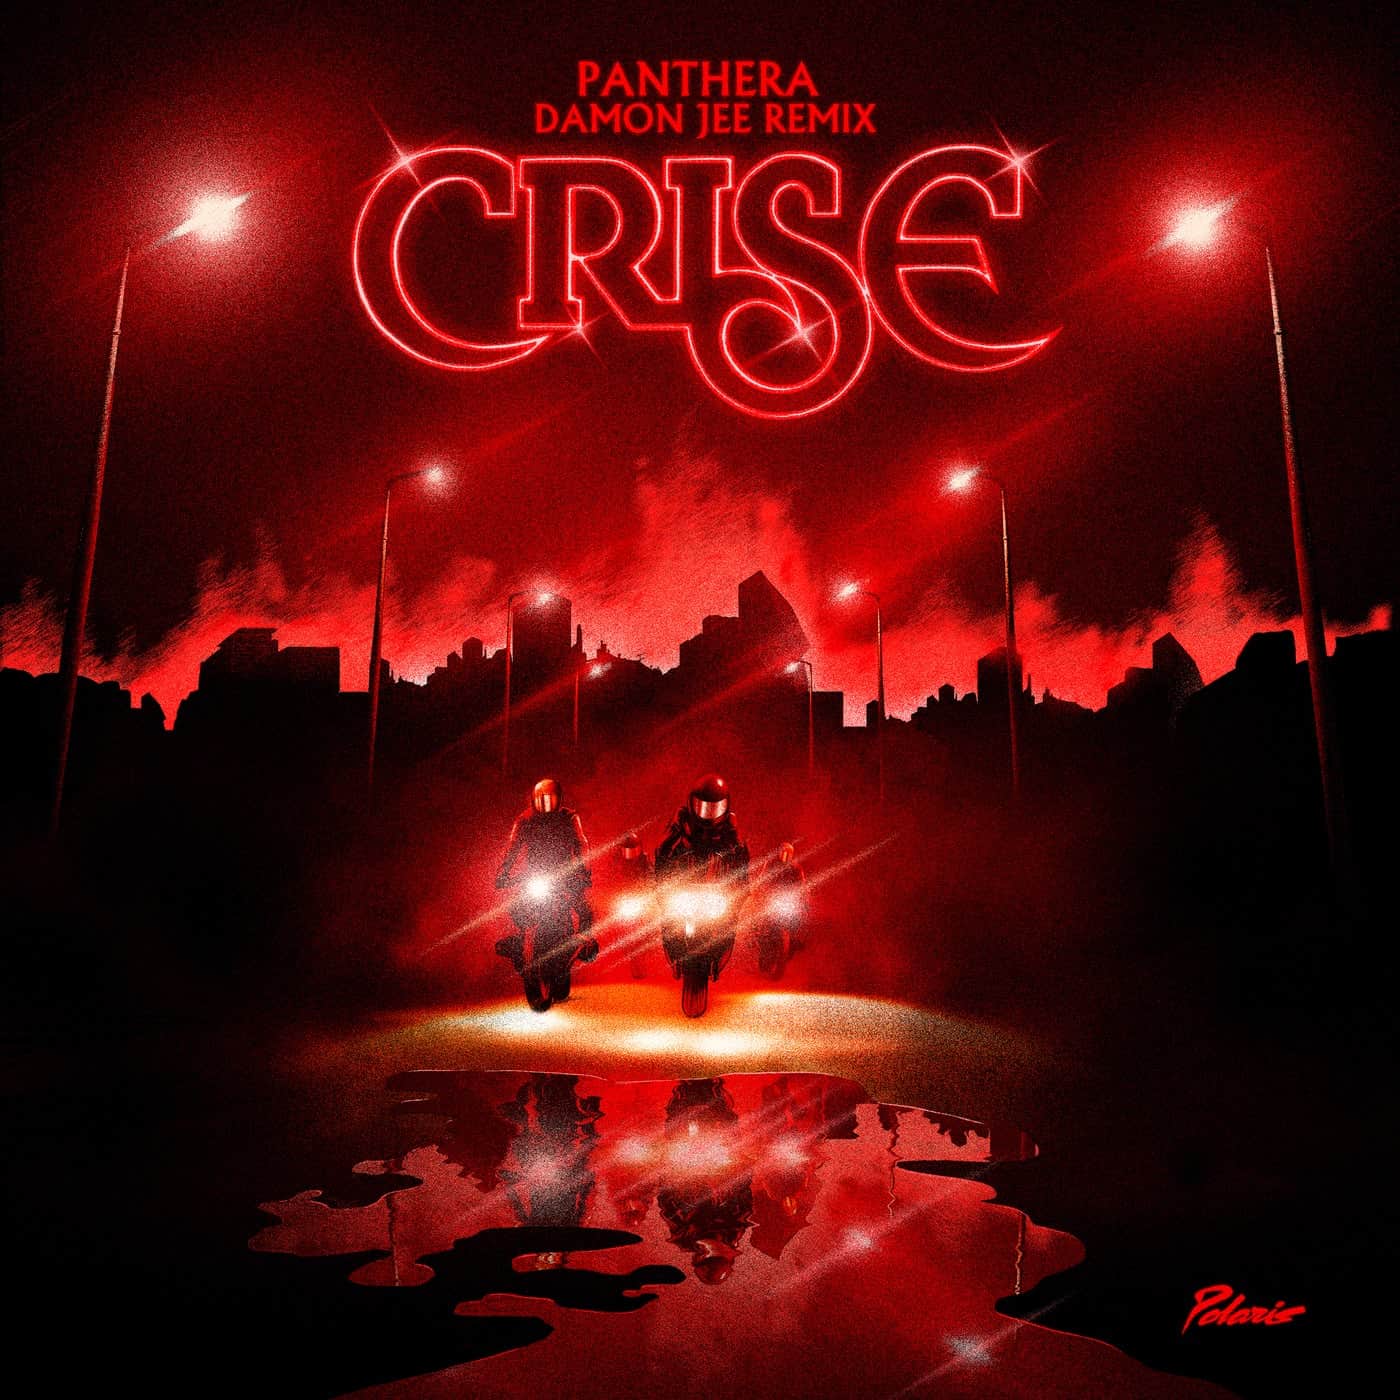 Download Panthera - Crise on Electrobuzz